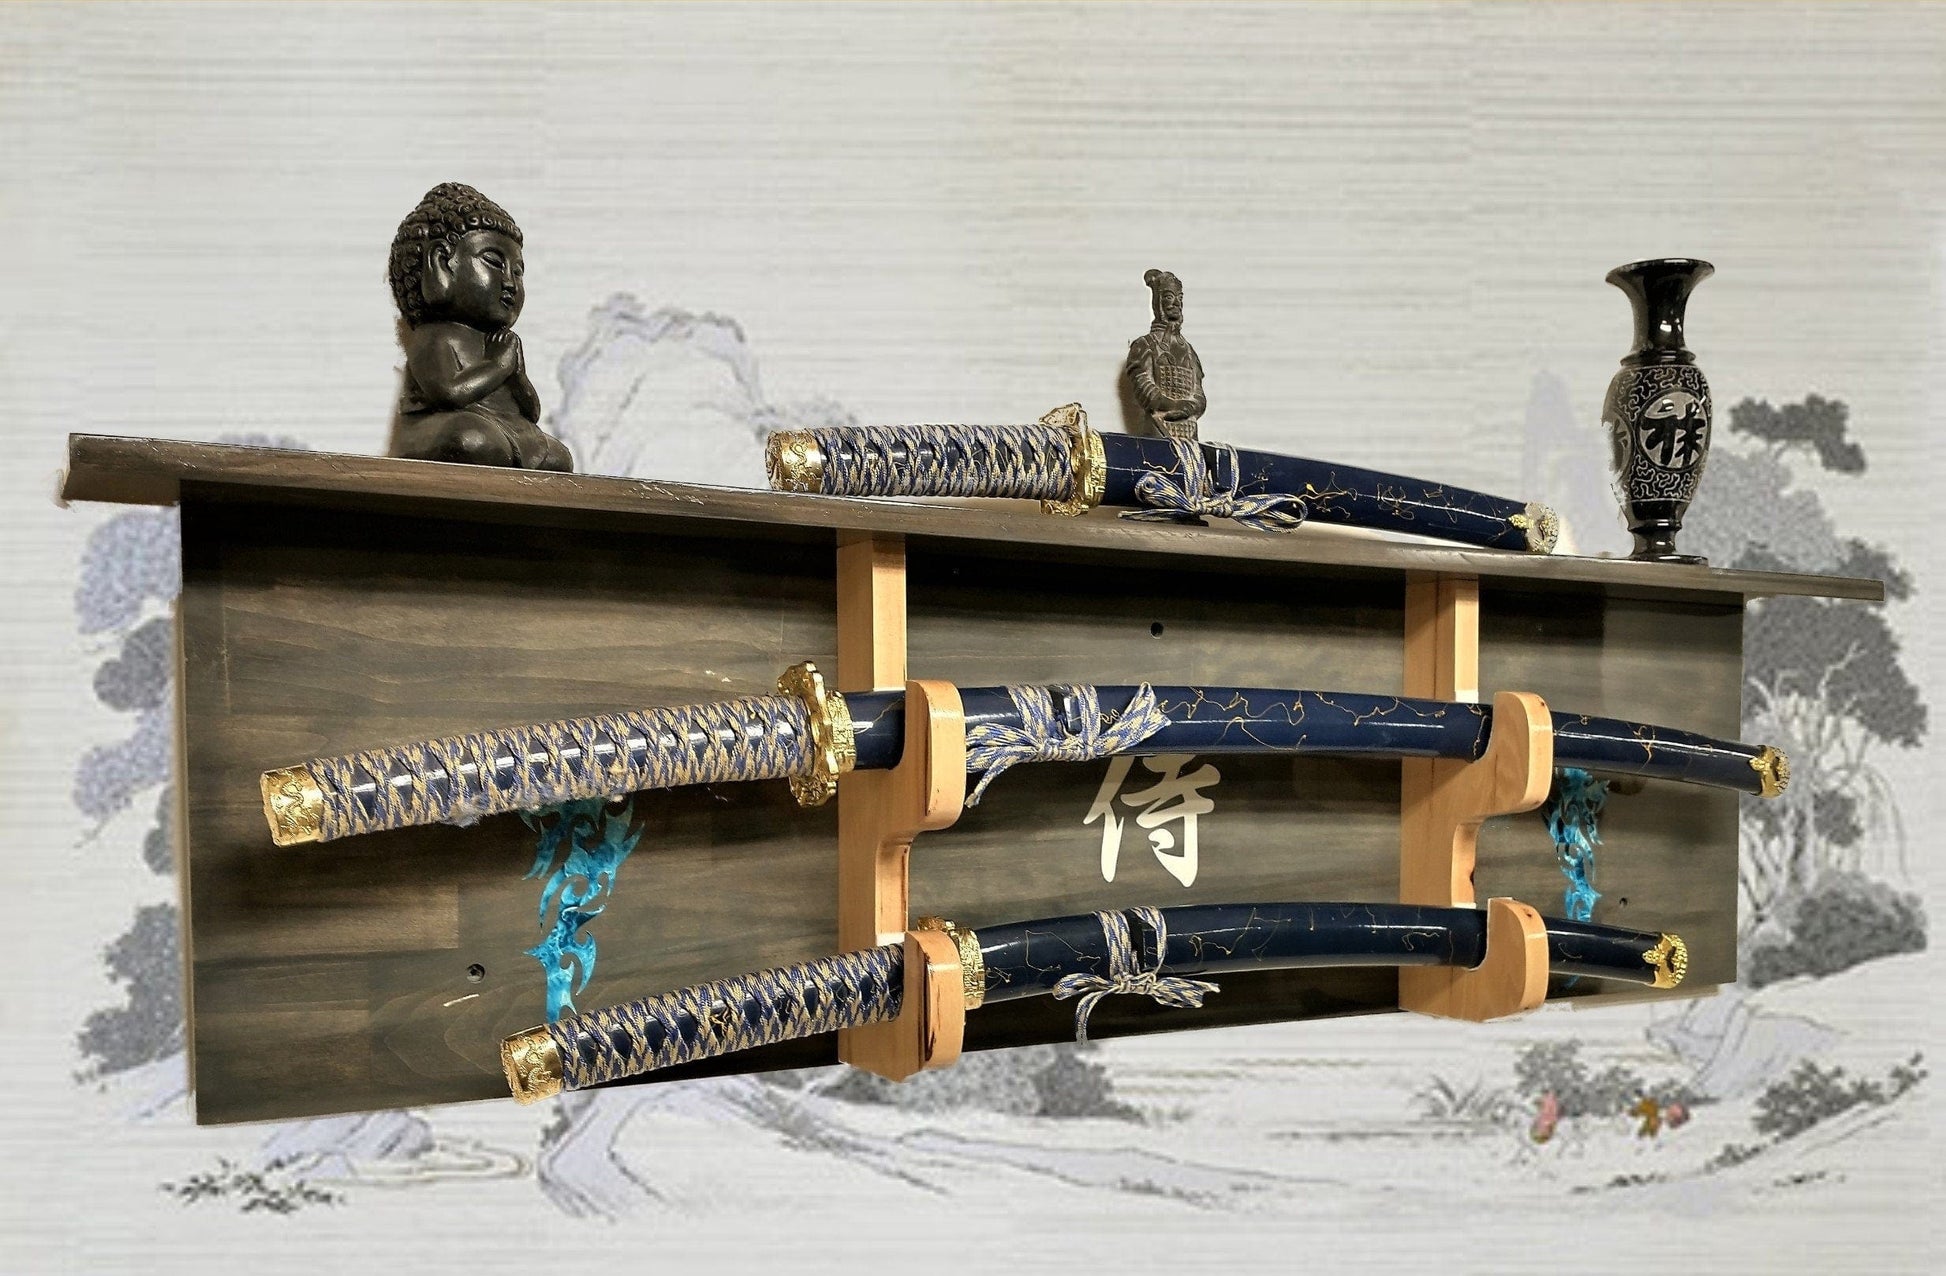 walkerwoodgifts Bushido WALL DISPLAY, Flaming Blue Dragons, 2 Tier Katana Samurai Display with Shelf, Weathered Gray Finish Dojo Gift